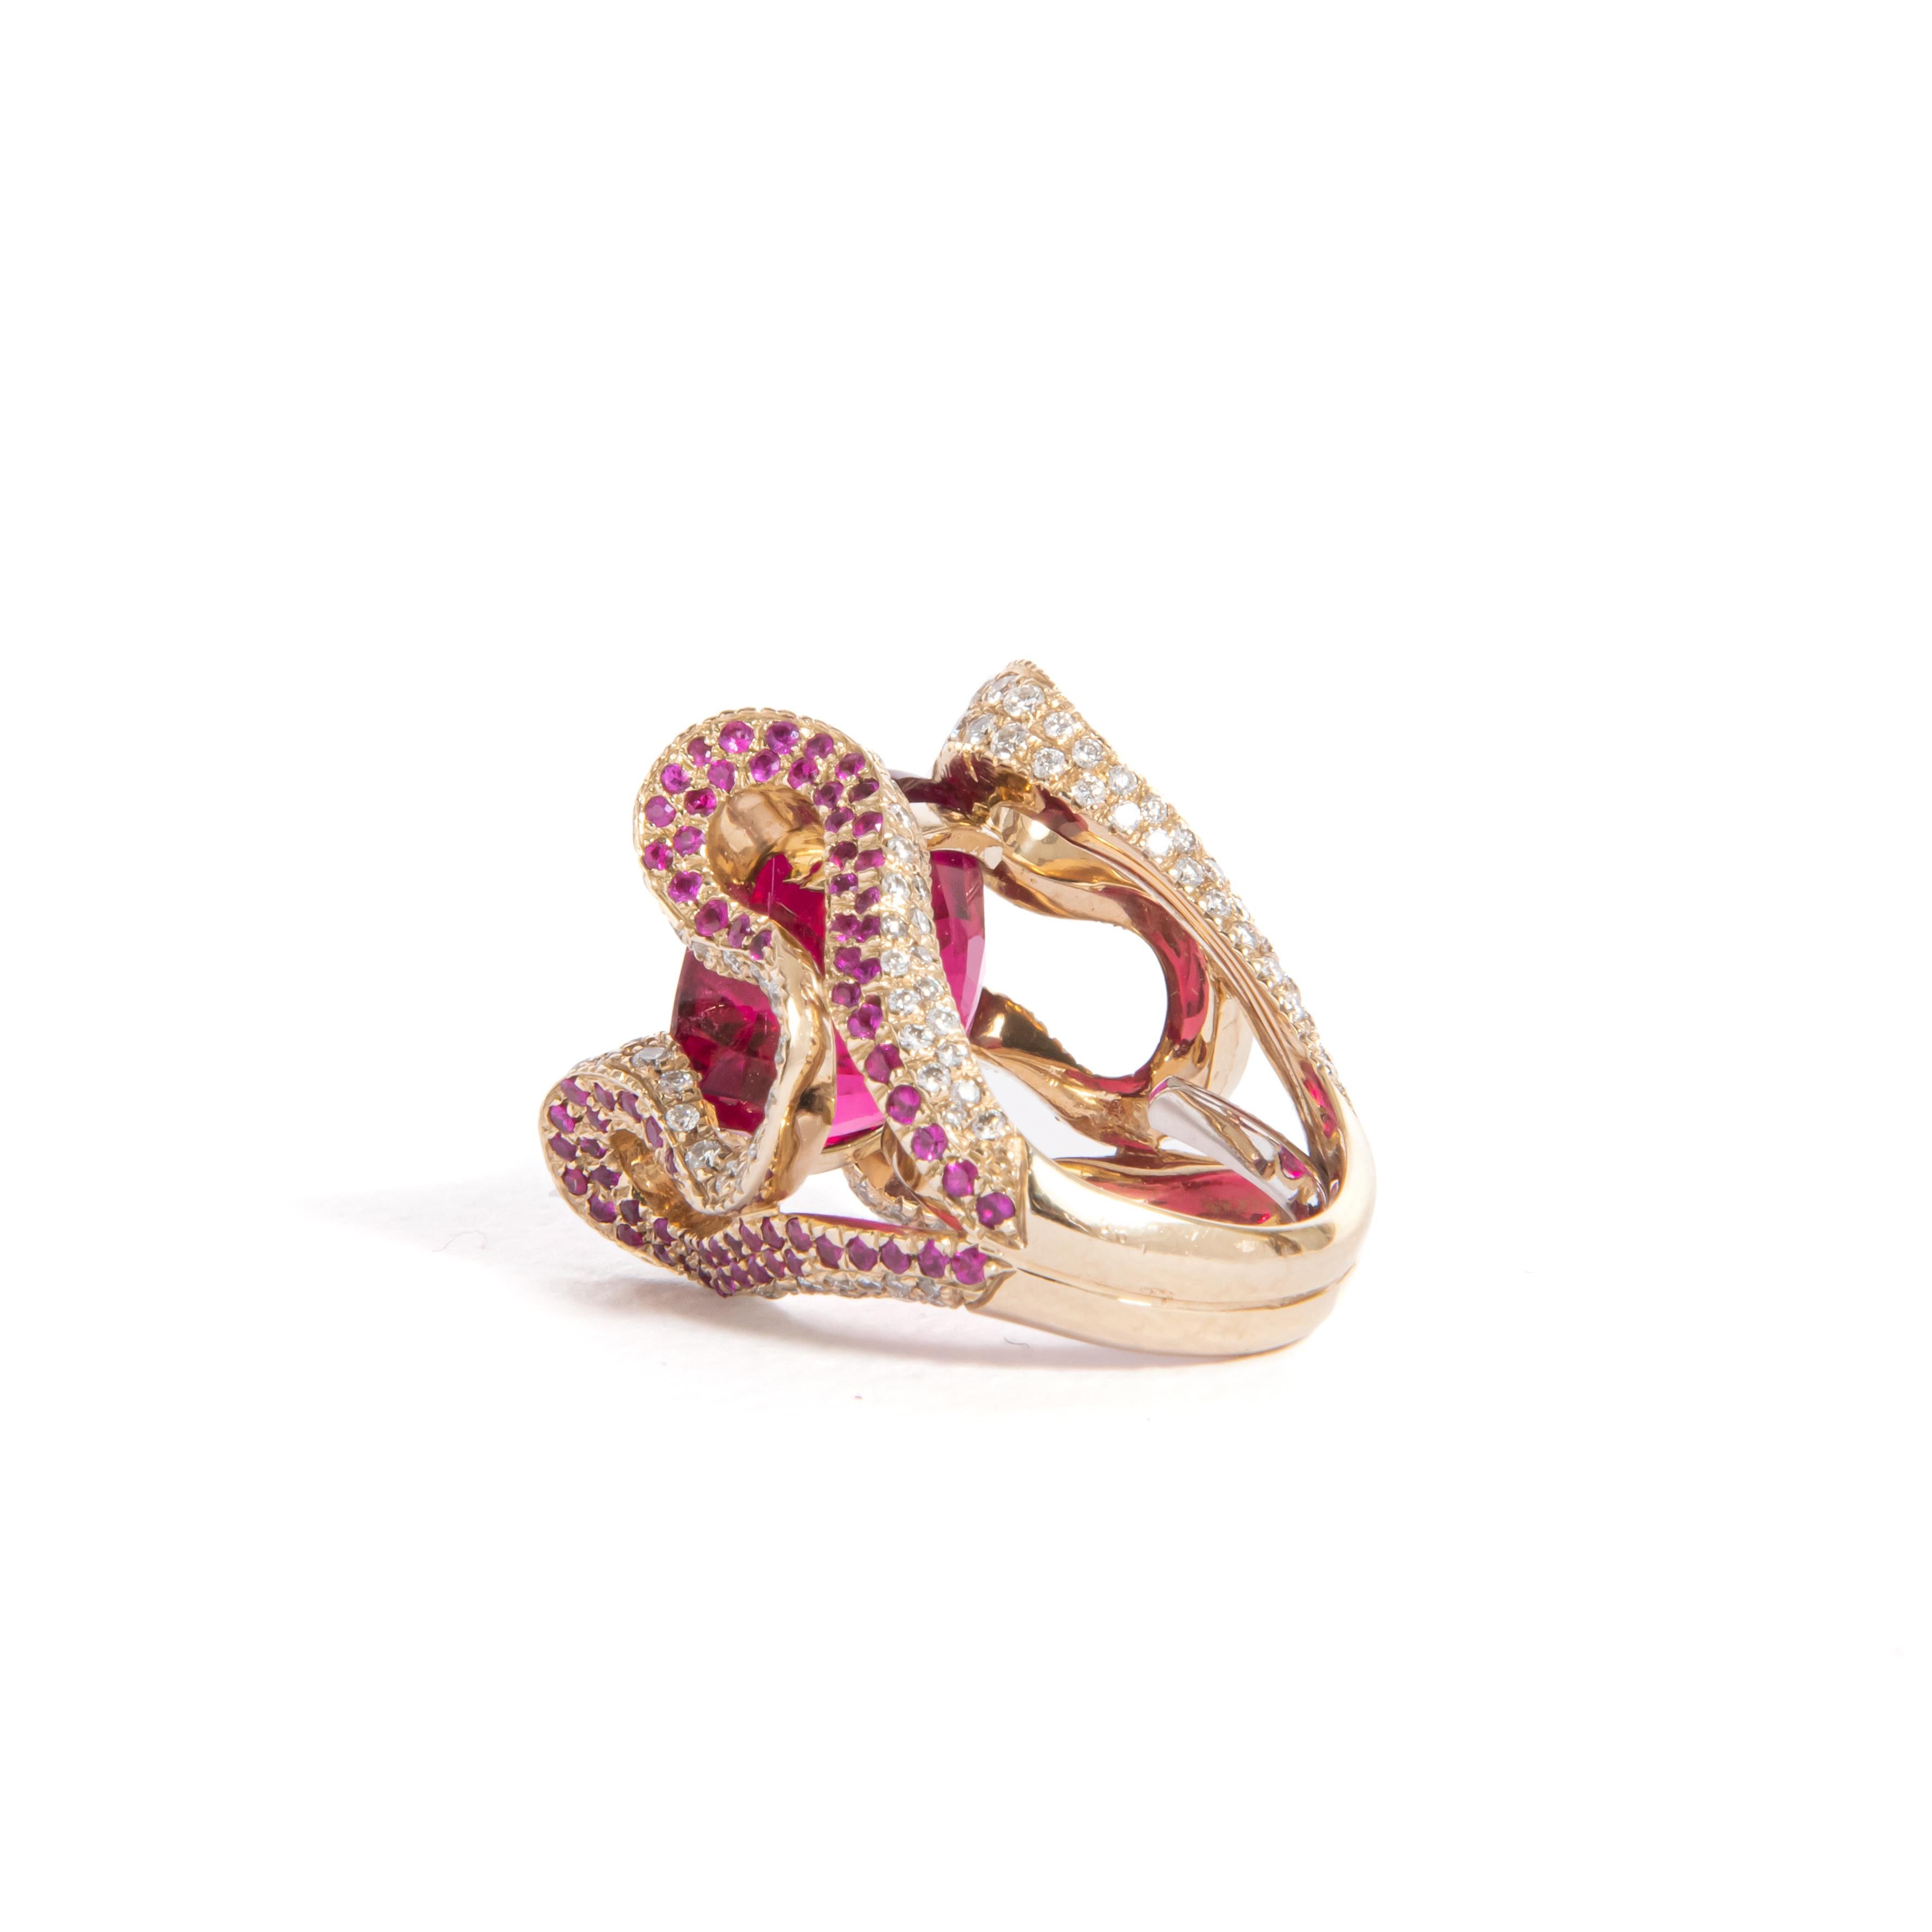 Brilliant Cut Regina Gambatesa Pink Sapphires Rubelite Diamonds and Grey Gold Ring For Sale